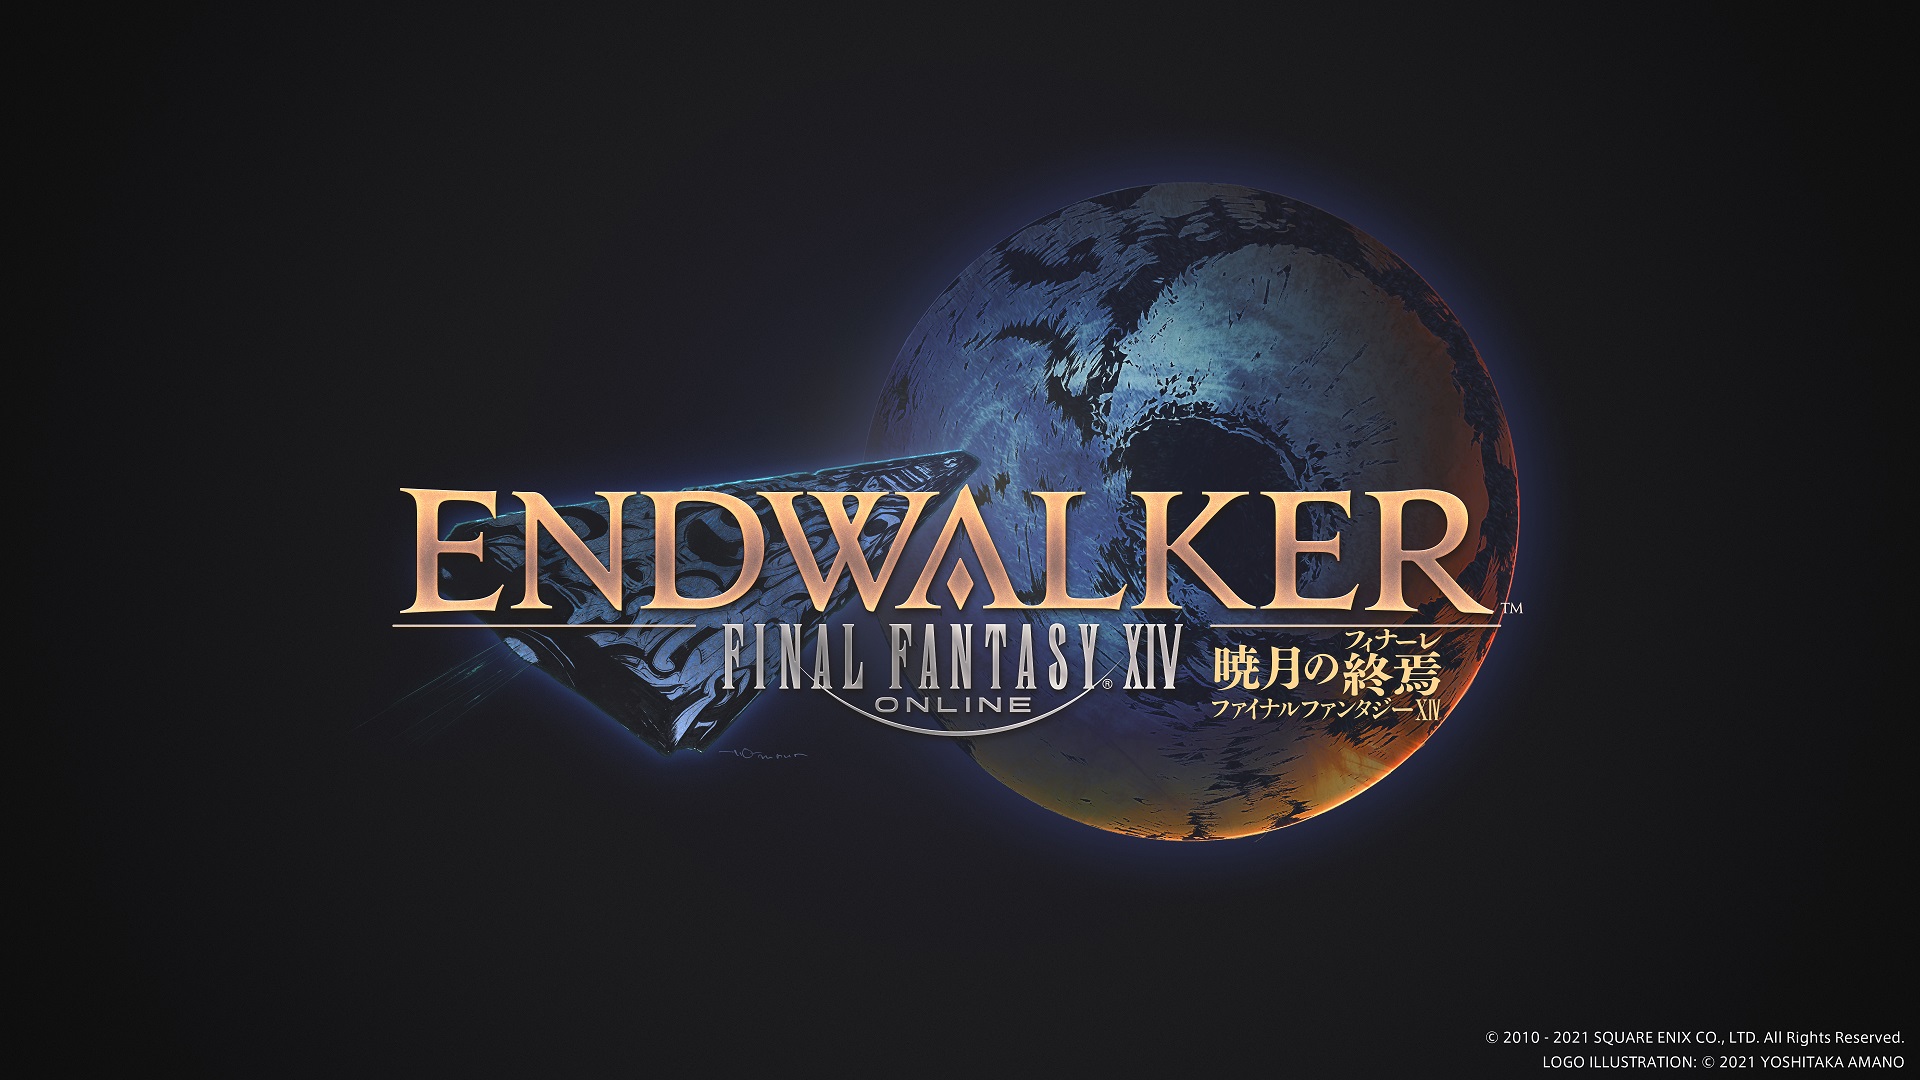 Final Fantasy XIV visera la lune pour sa prochaine extension Endwalker